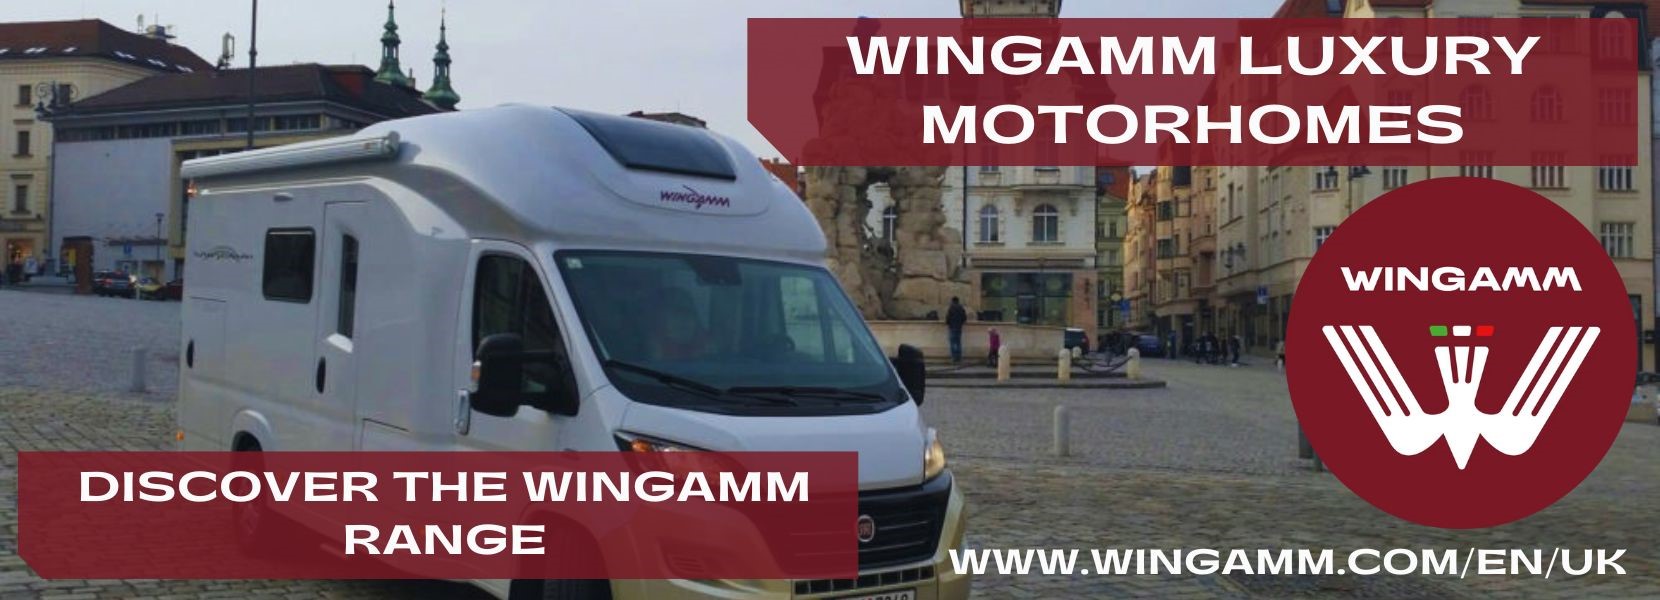 Wingamm Luxury Motorhomes. Discover the Wingamm Motorhome Range